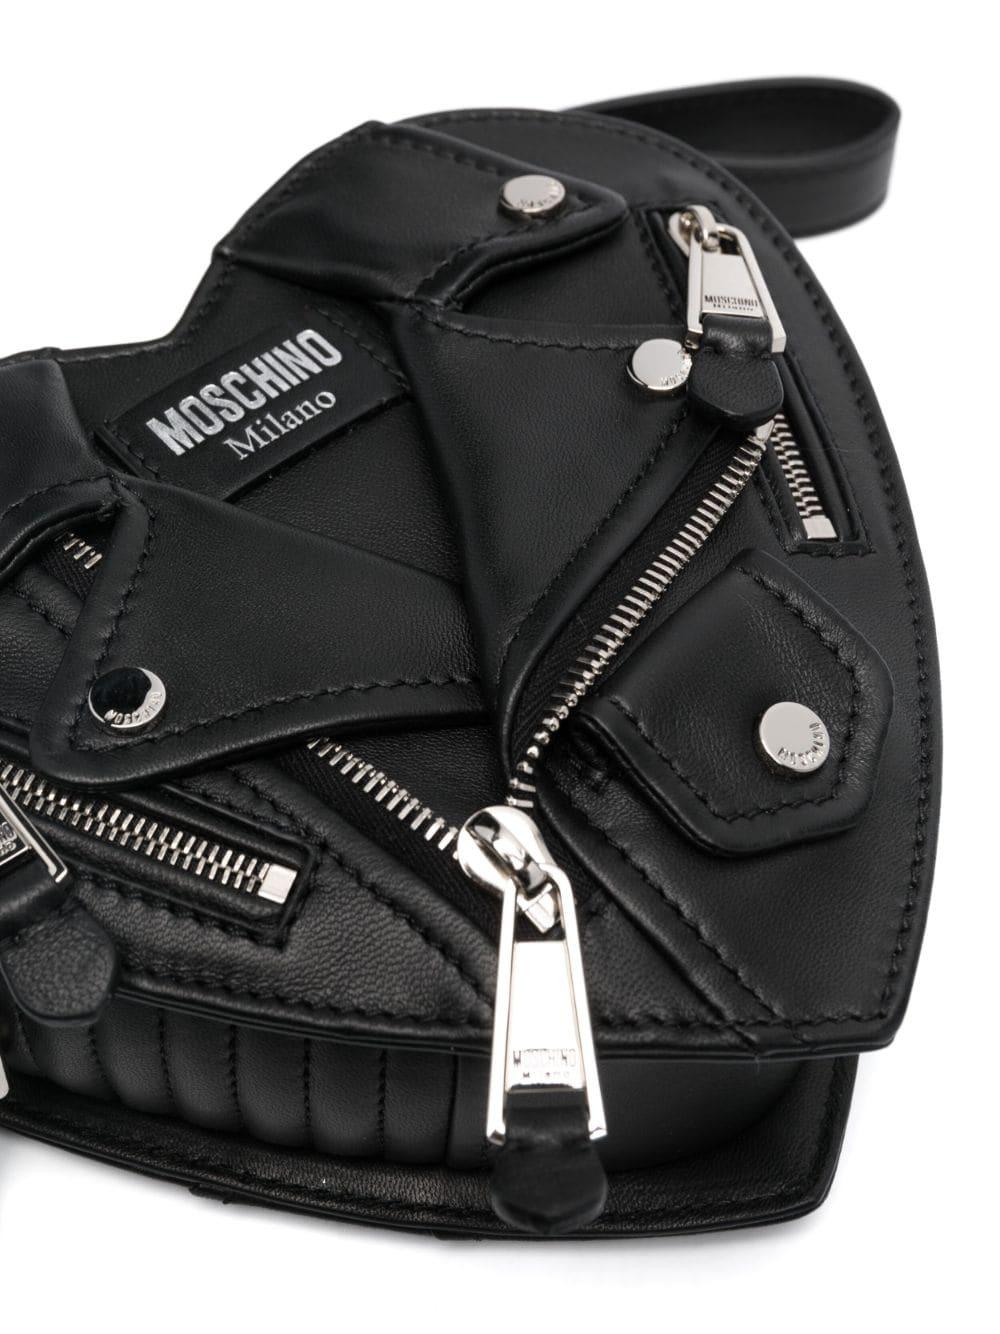 Moschino Heart-shape Moto Leather Crossbody Bag Black